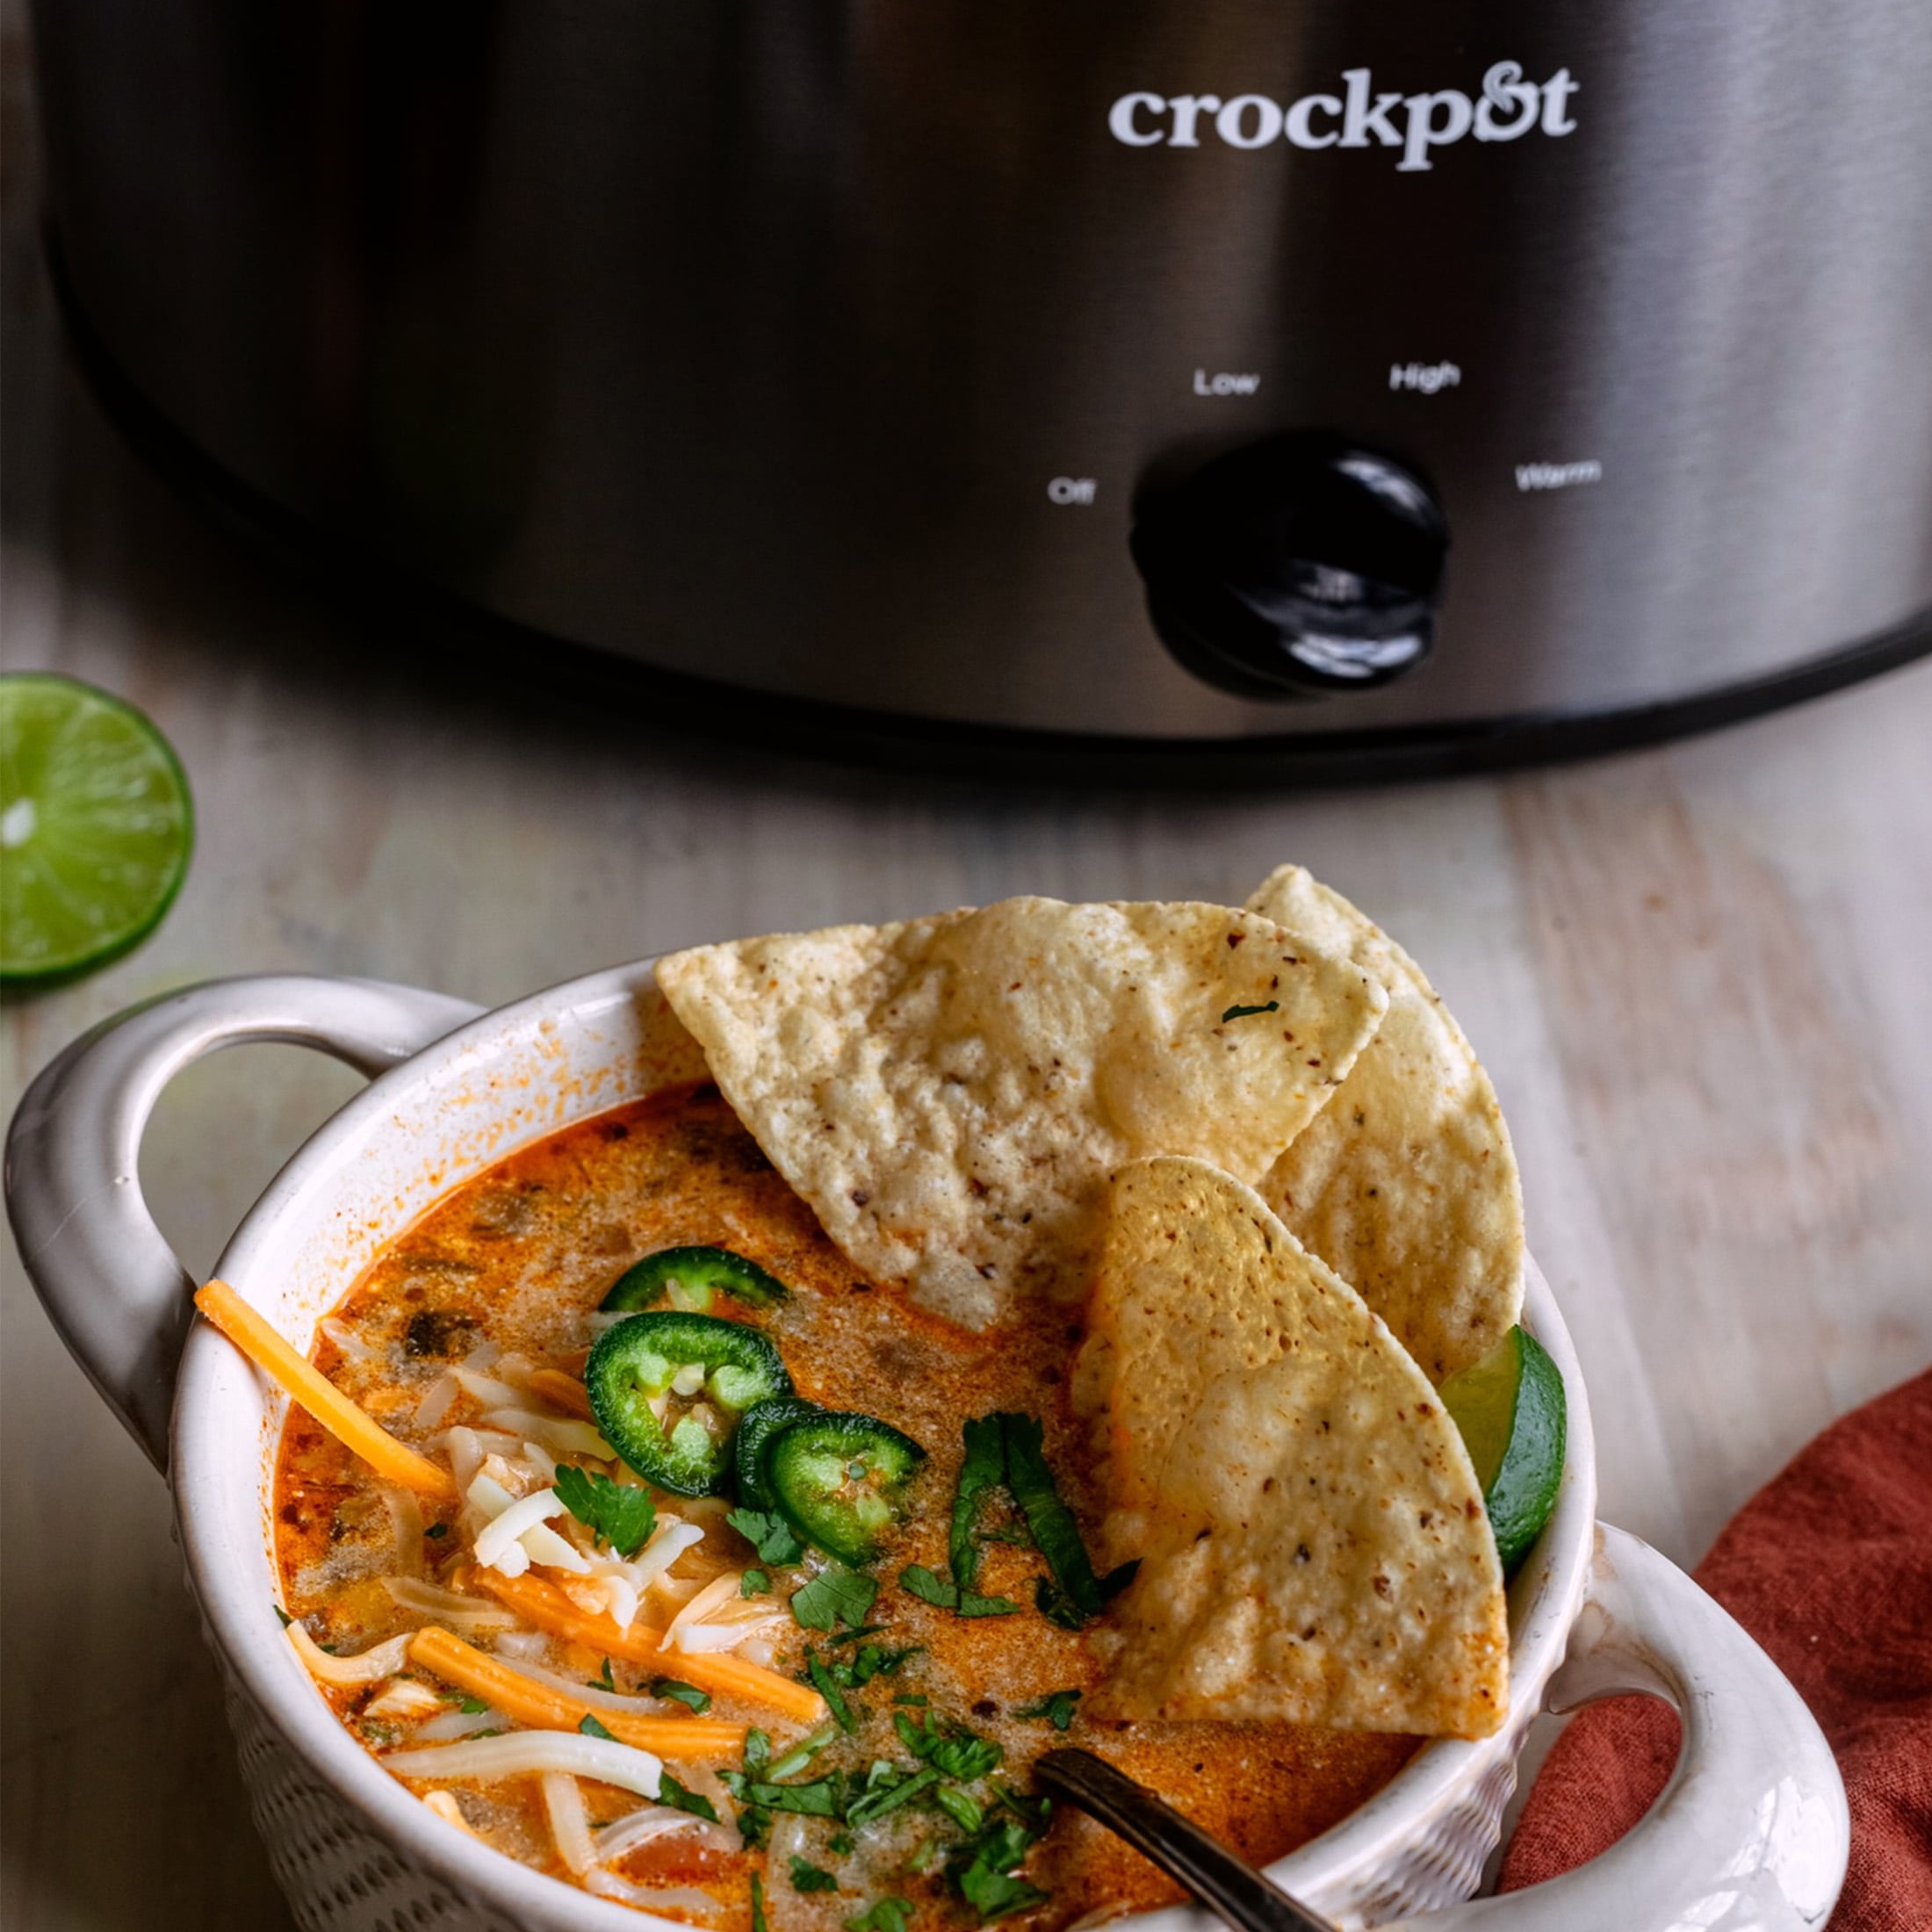 Crock-Pot® One-Touch Control 6-Quart Cook & Carry Slow Cooker, Matte Black